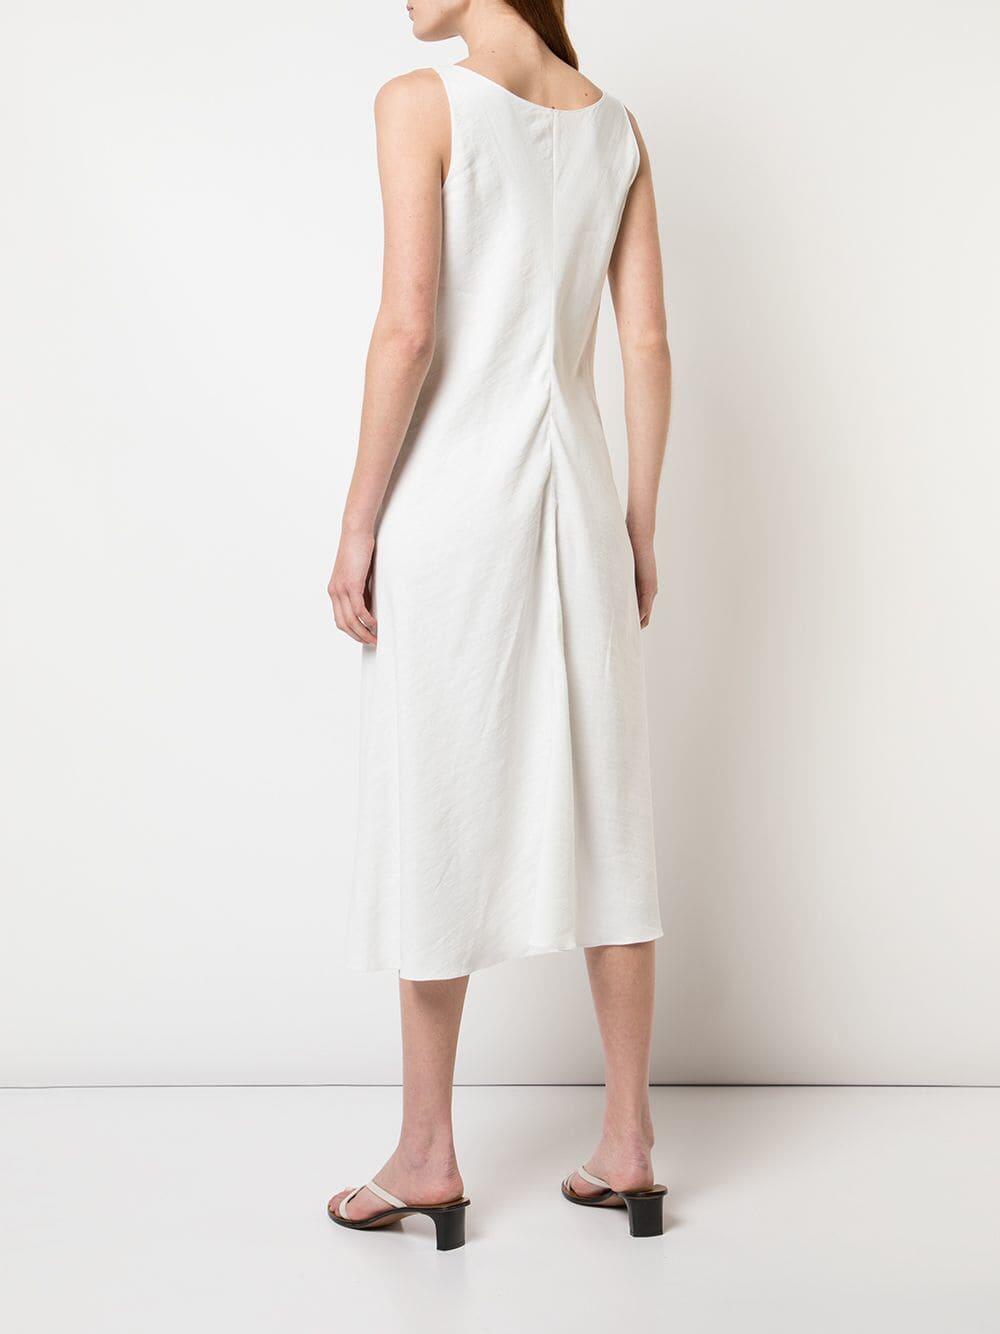 Peter Cohen - White Stretch Linen Sleeveless Dress